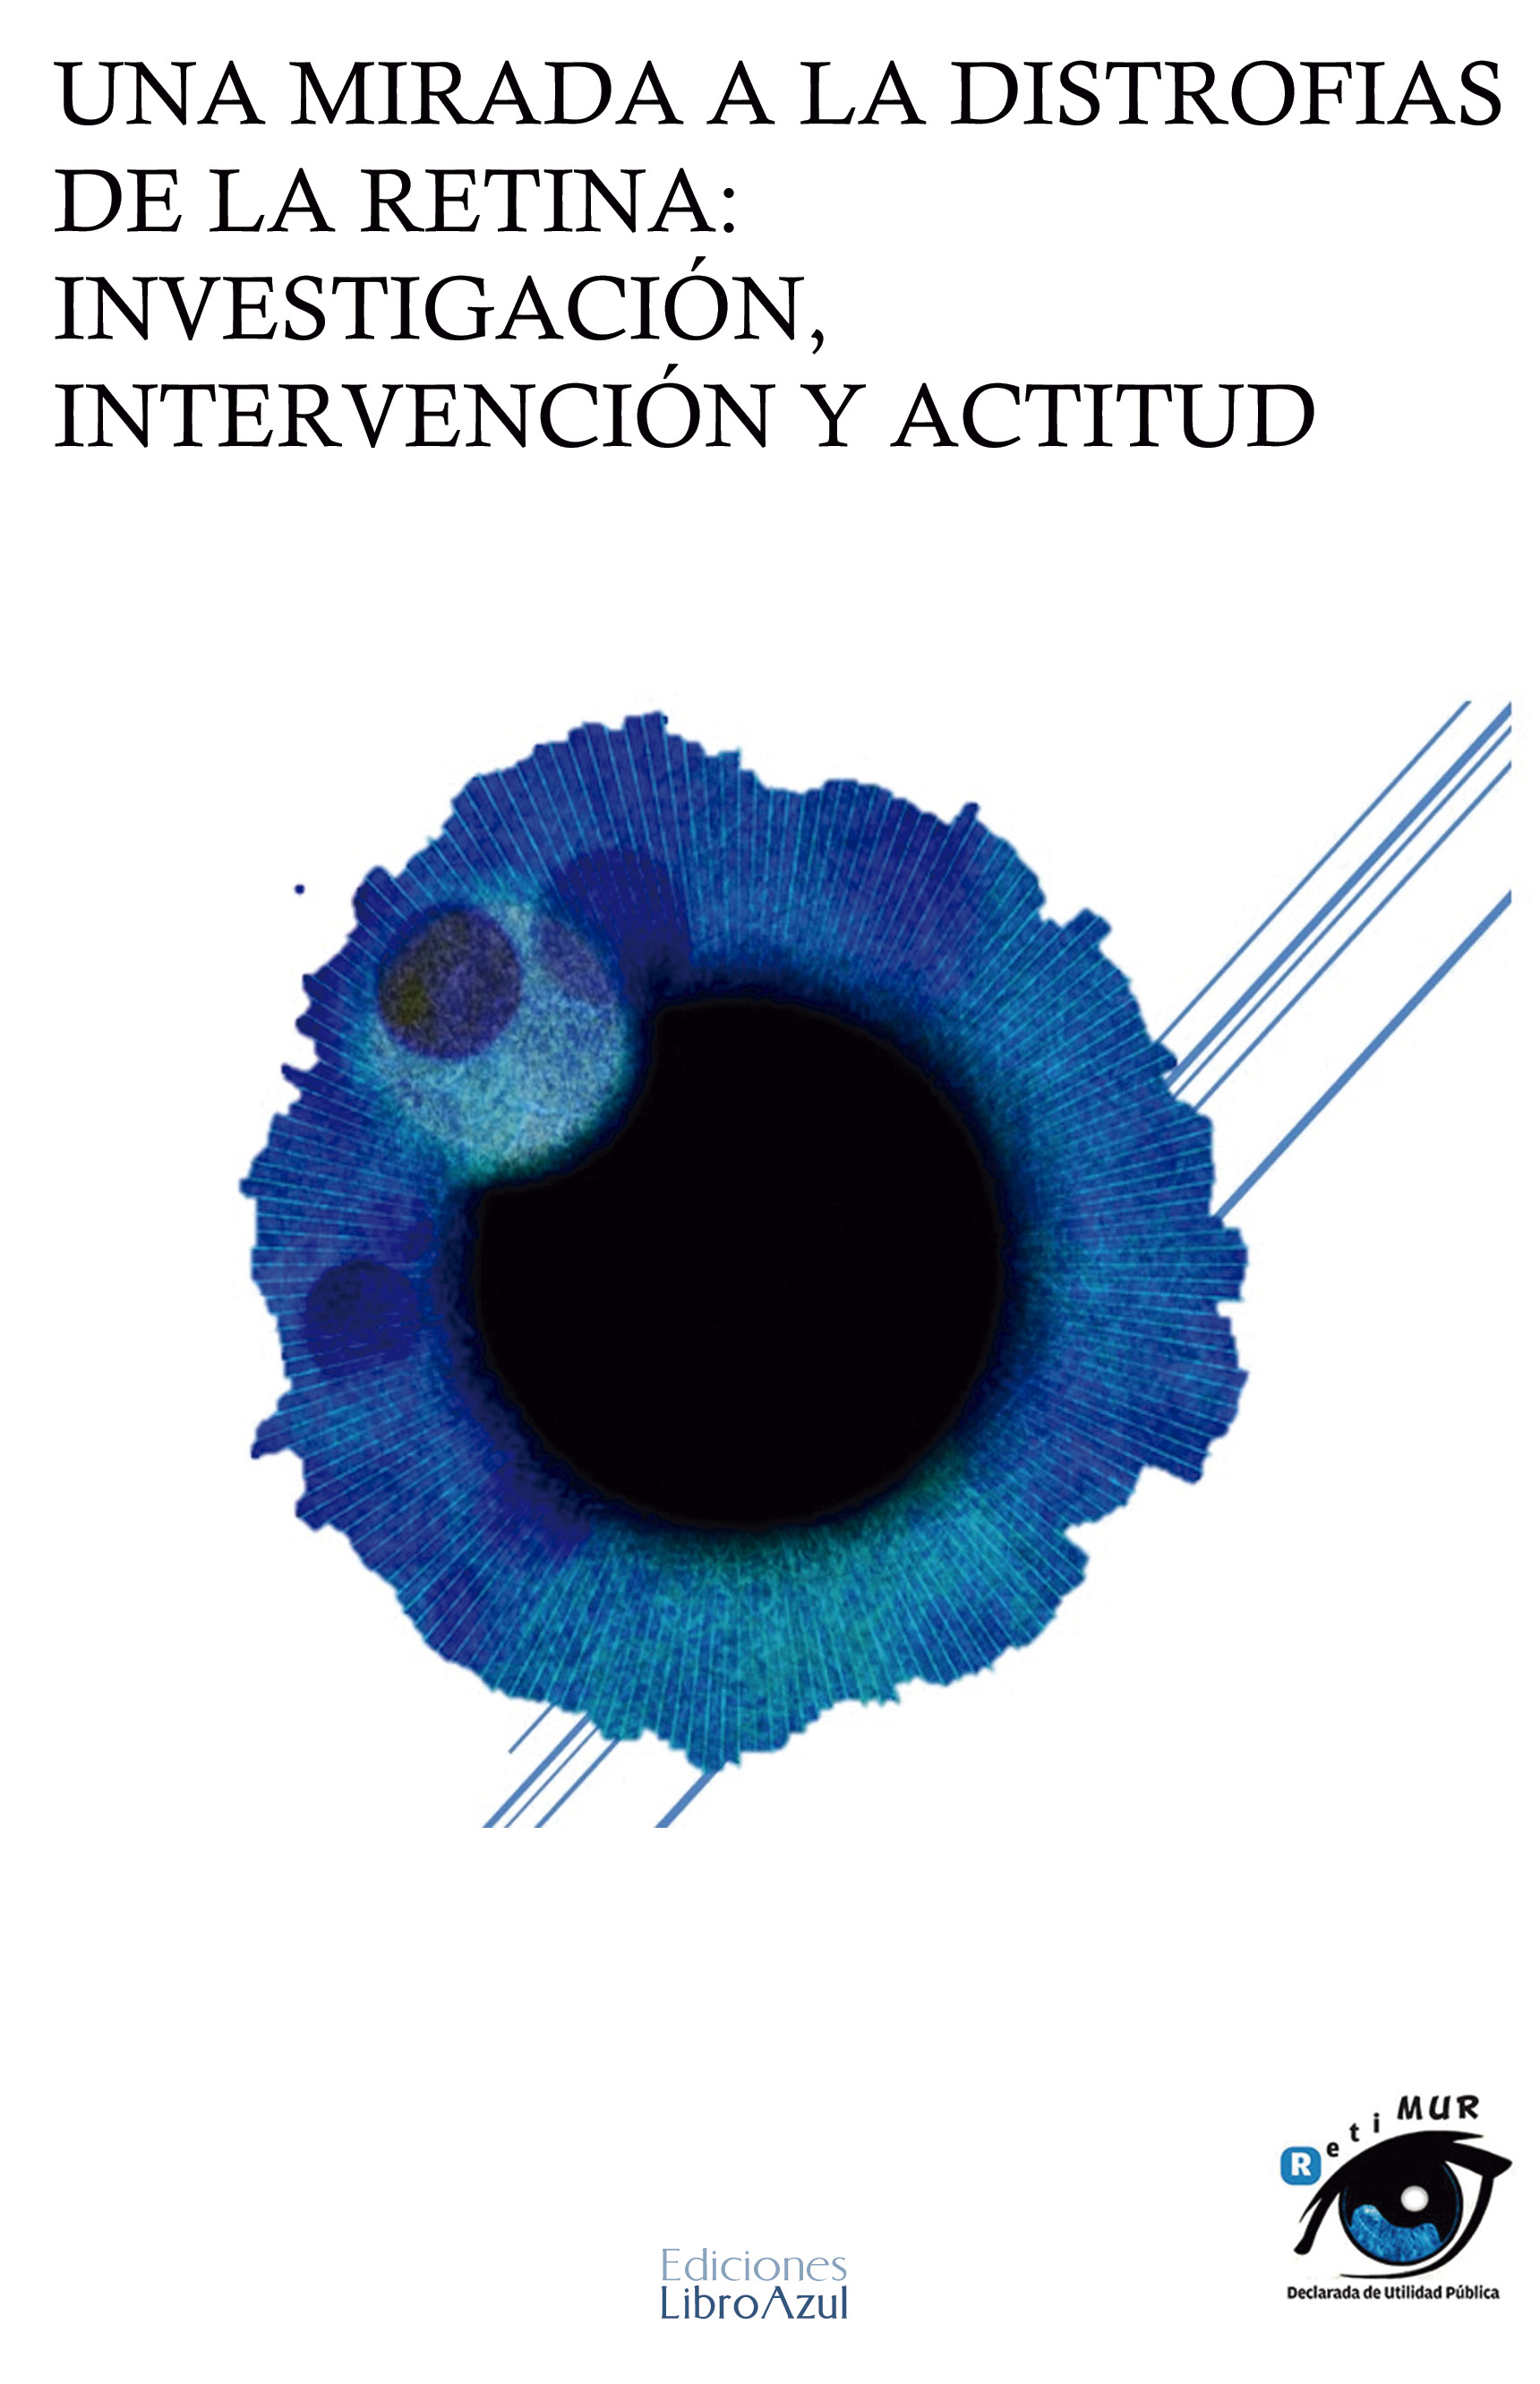 Imagen de portada del libro Una mirada a la distrofias de la retina